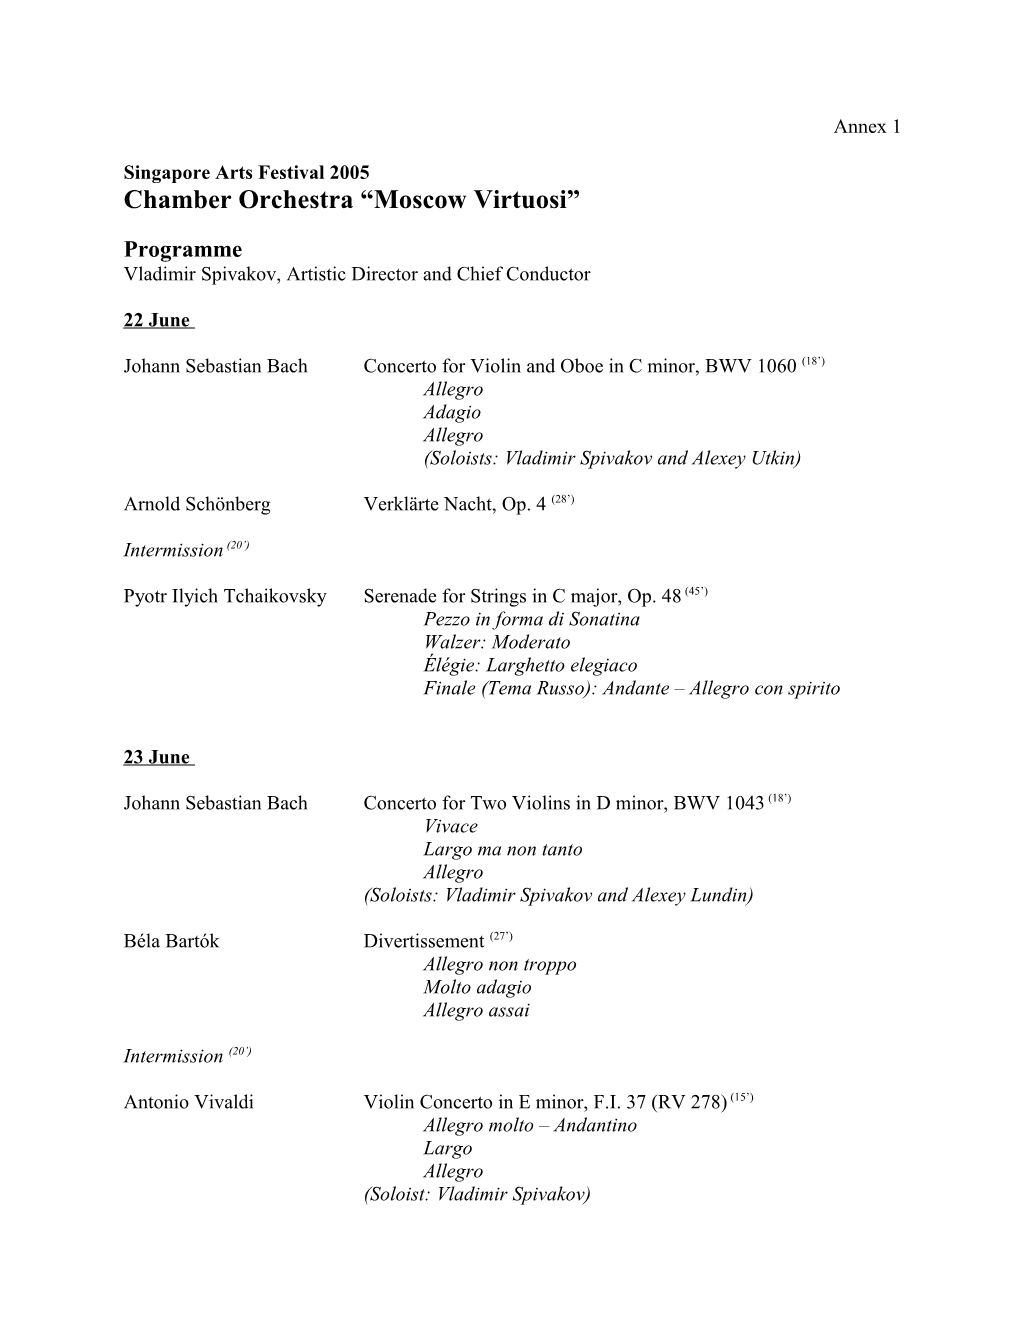 Chamber Orchestra Moscow Virtuosi